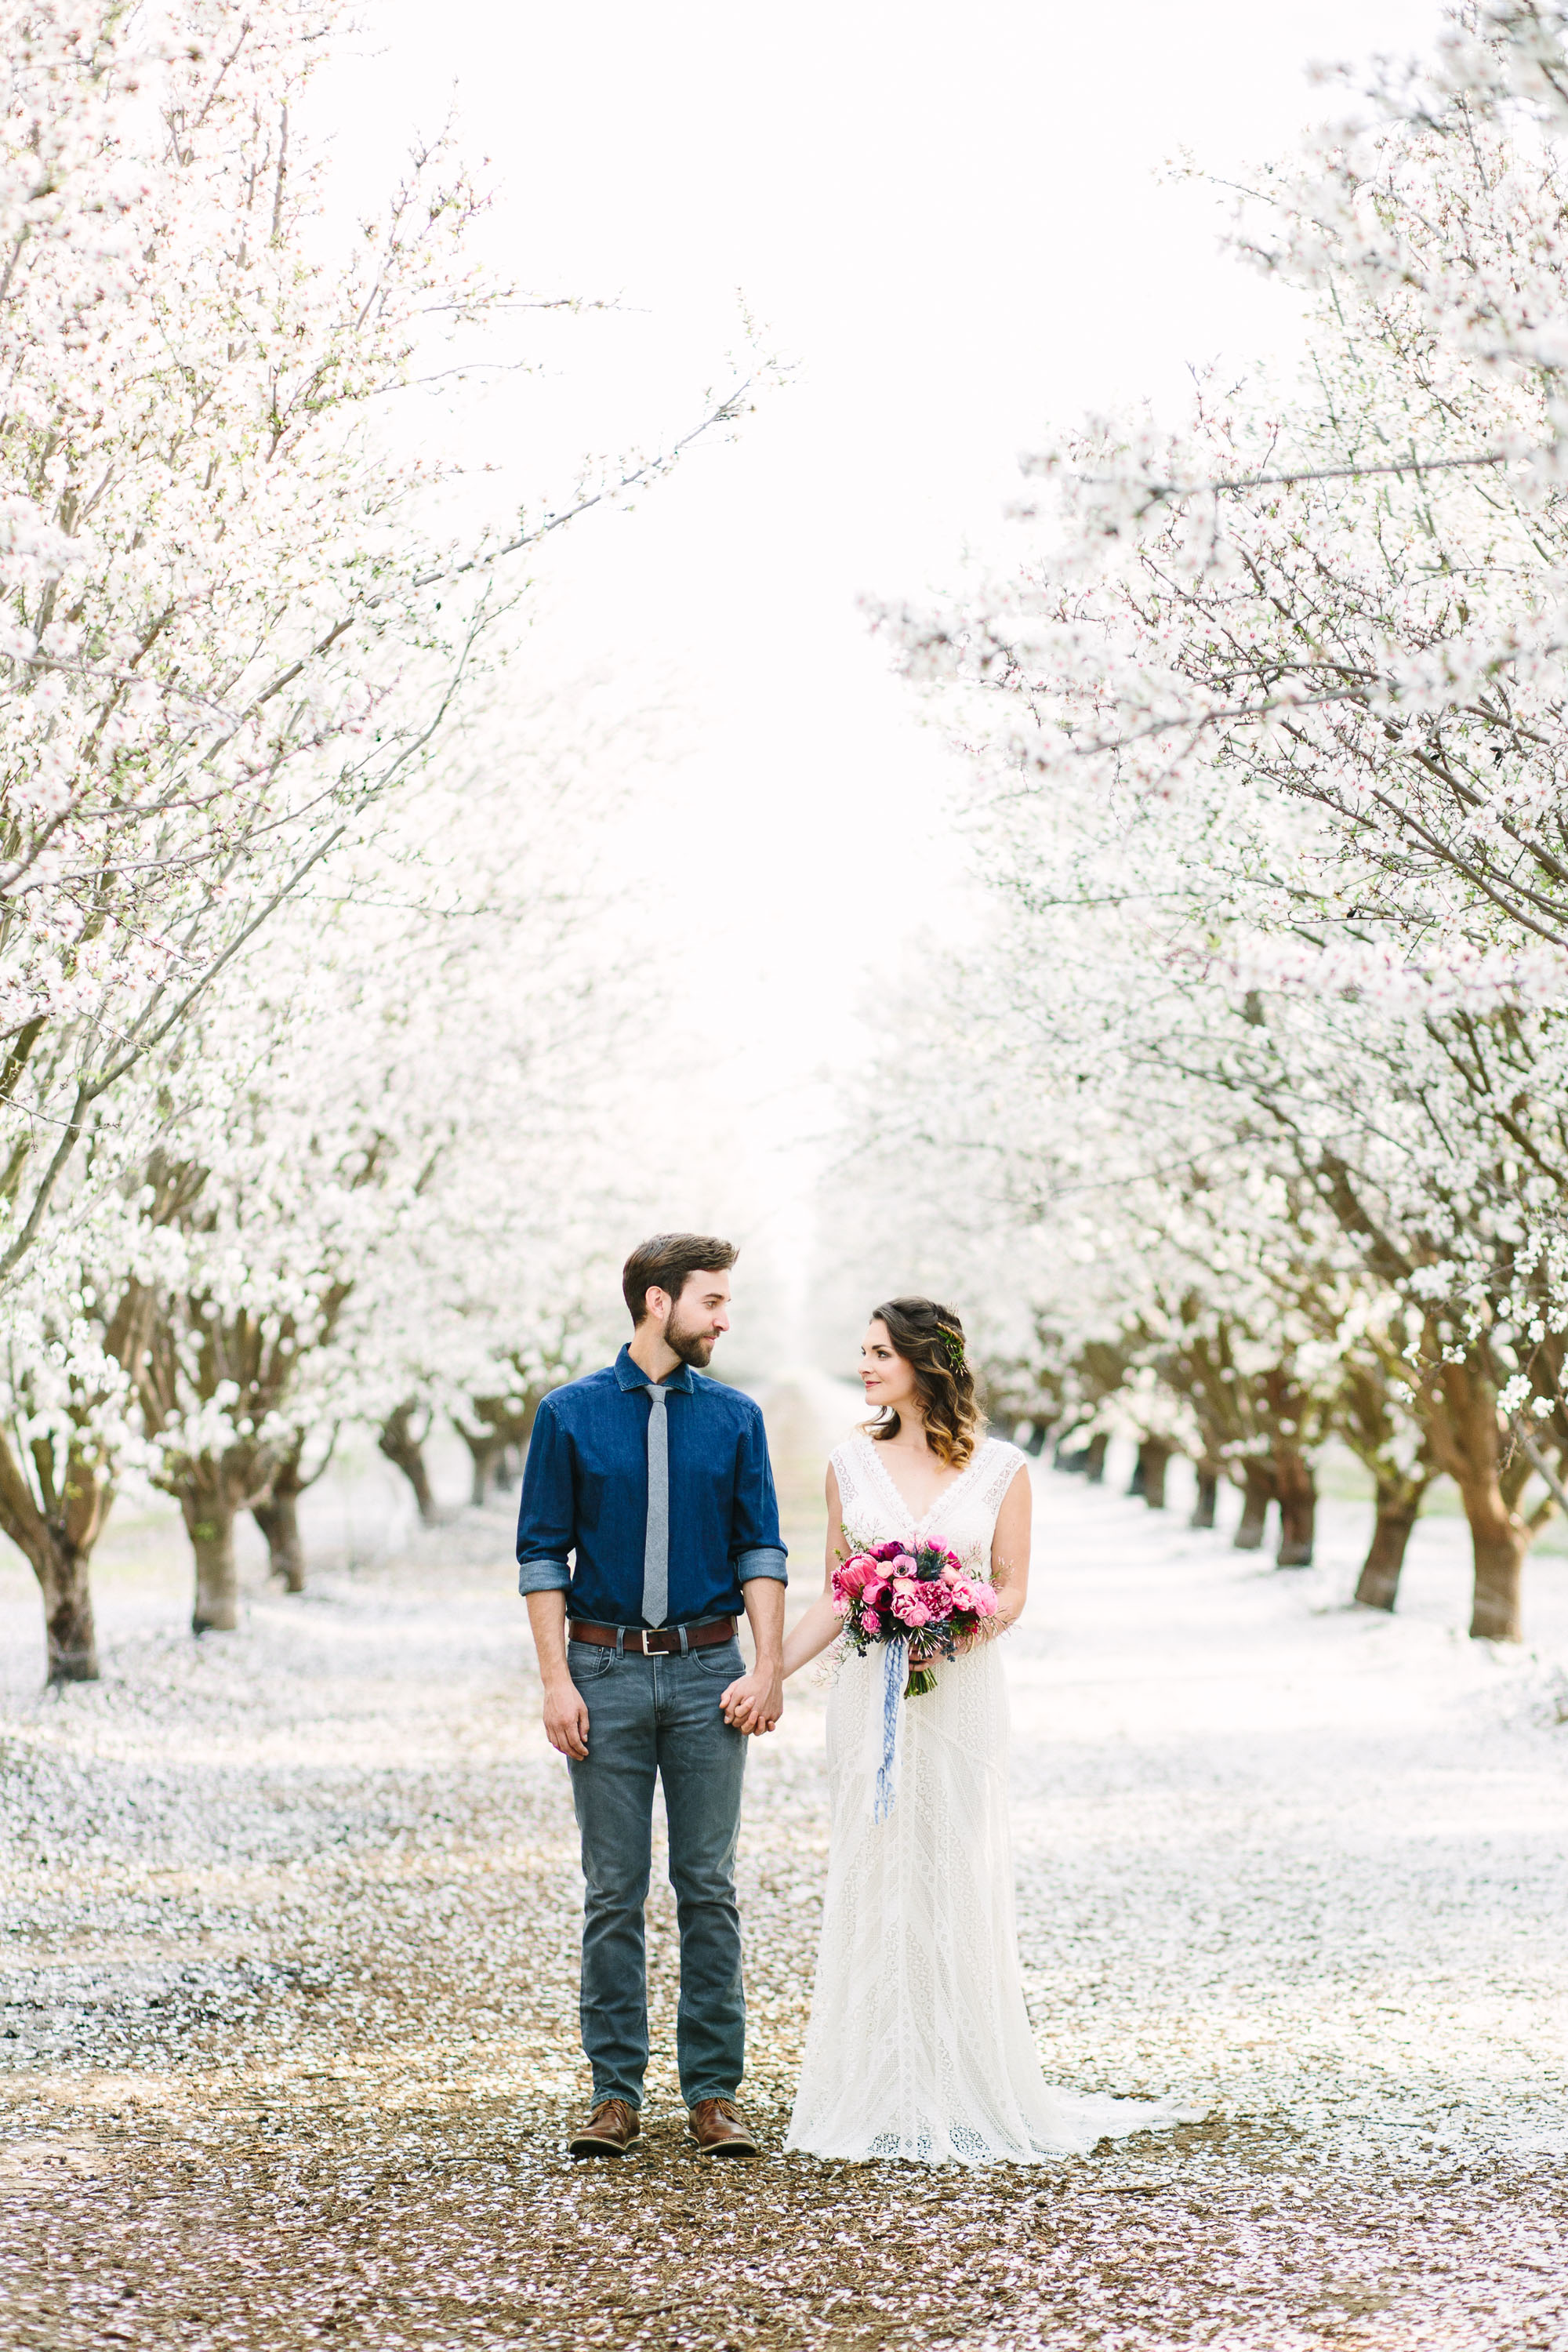 www.marycostaphotography.com | Almond Orchard Wedding Inspiration Blog | 033